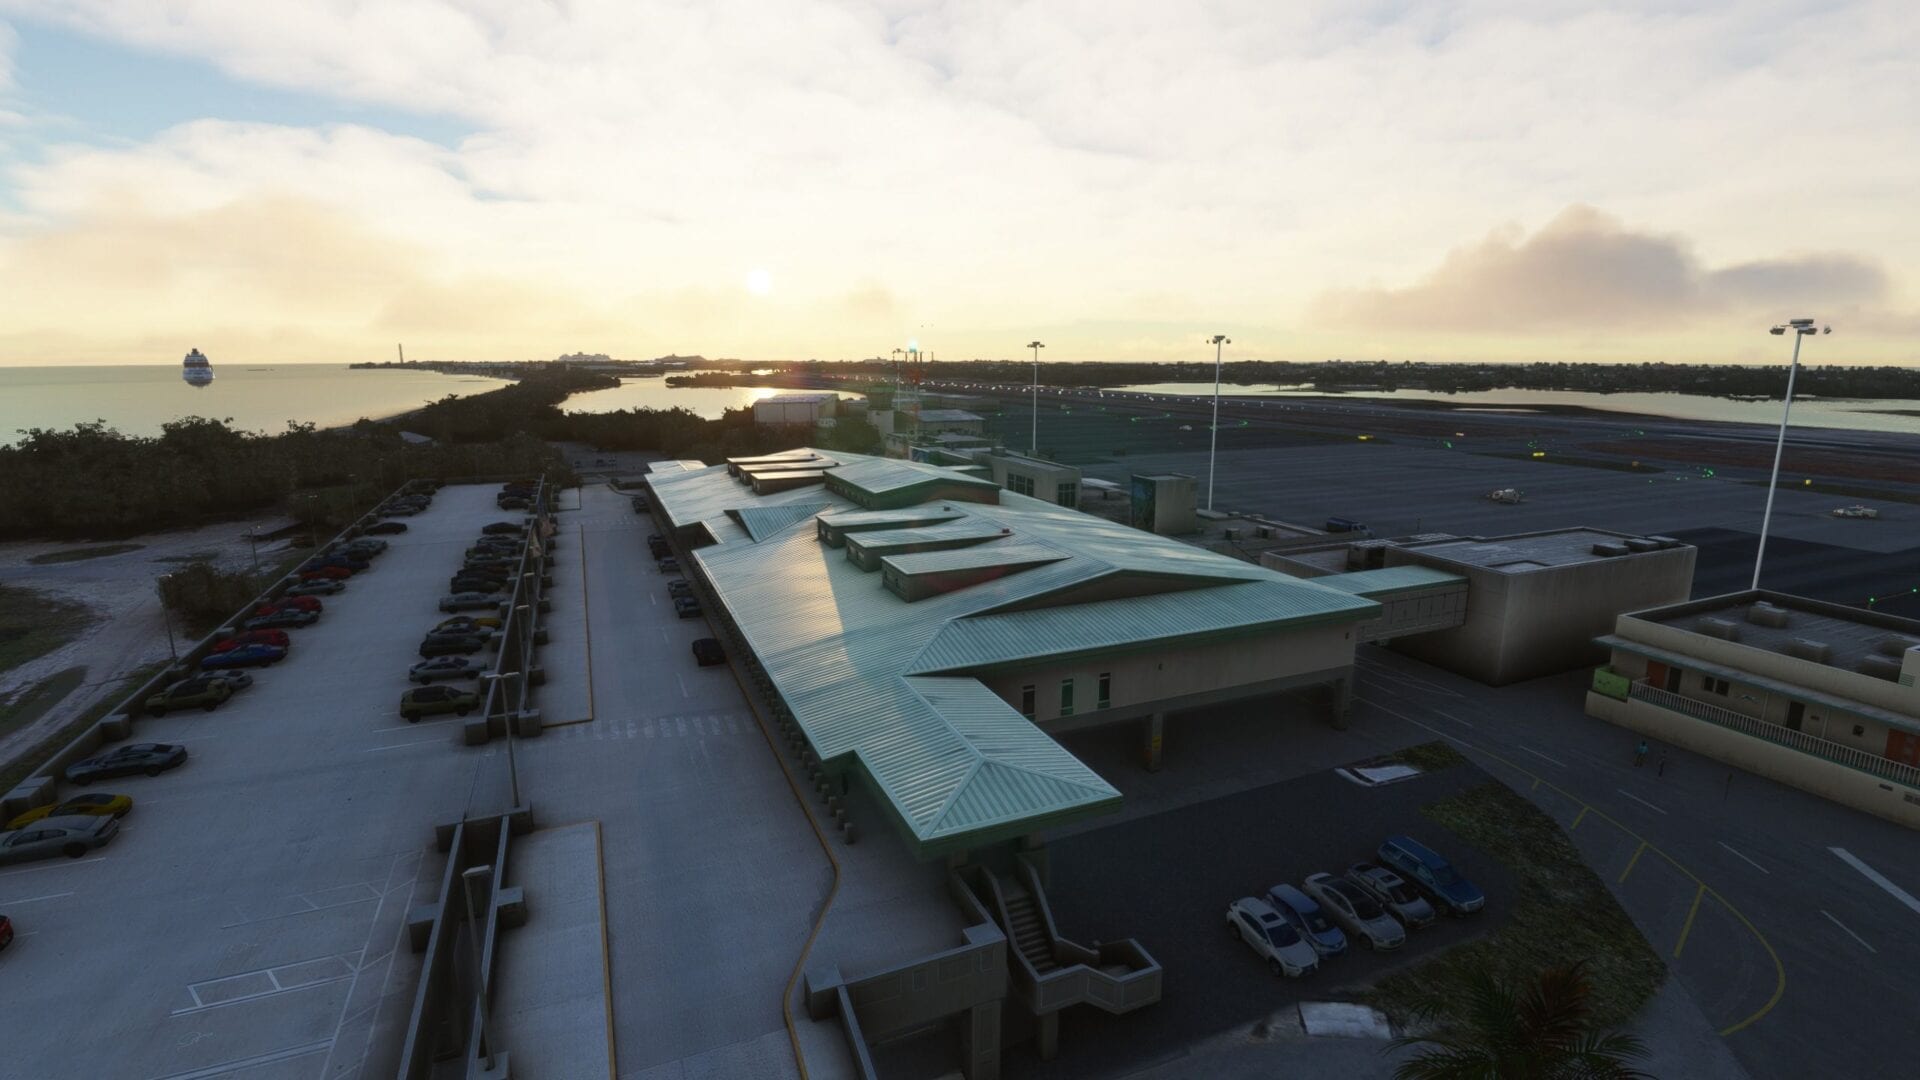 Microsoft Flight Simulator Key West Review